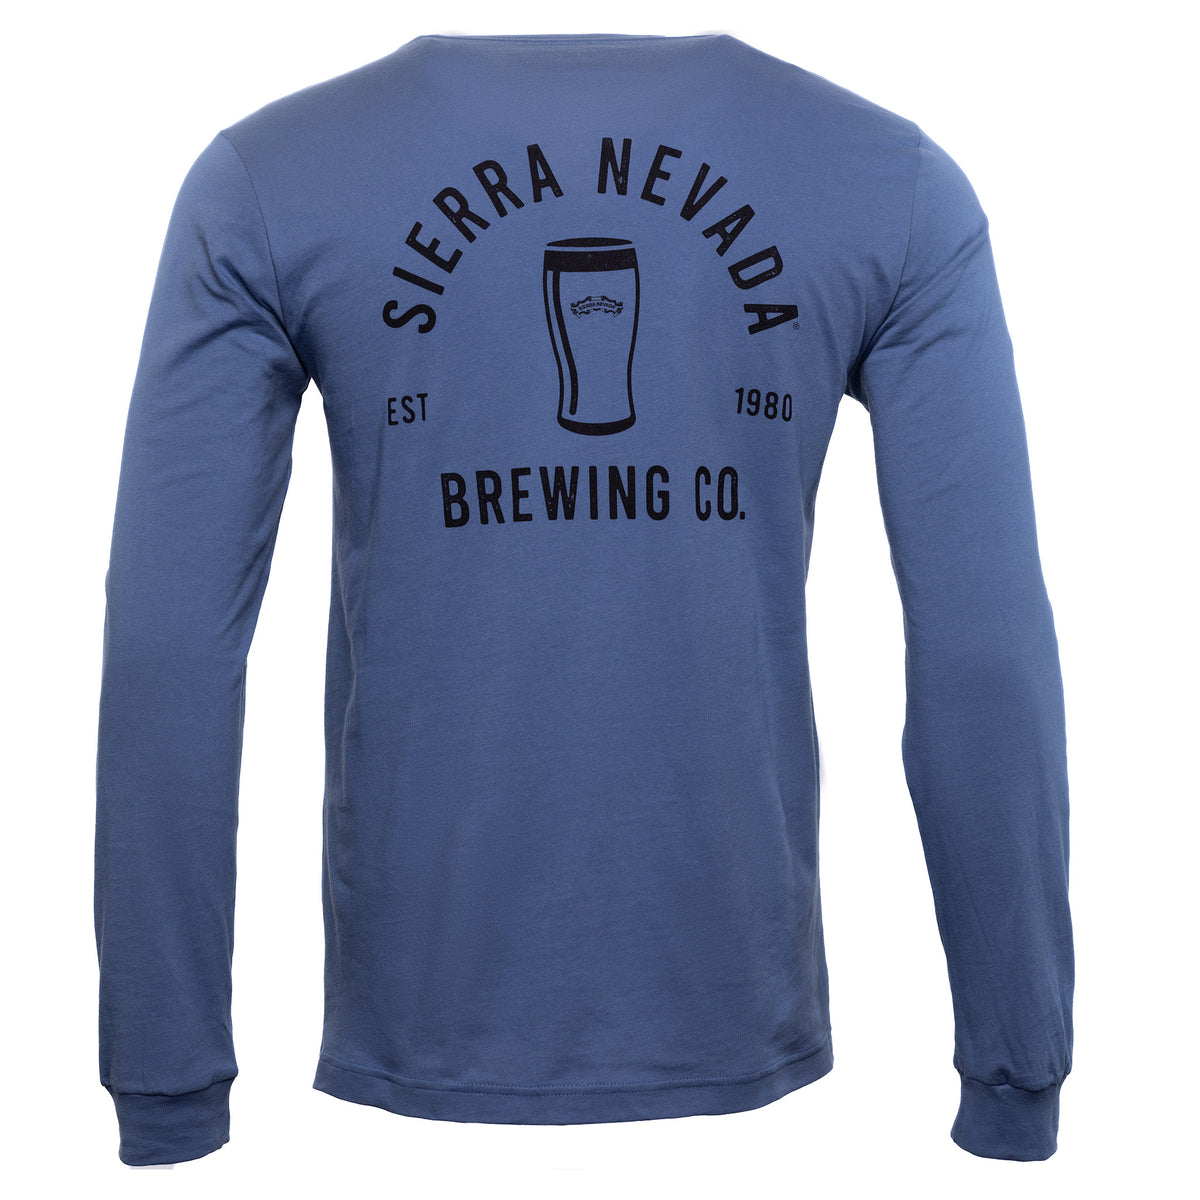 Sierra Nevada Brewing Co. Hop Tulip Long Sleeve T-Shirt Blue Back View